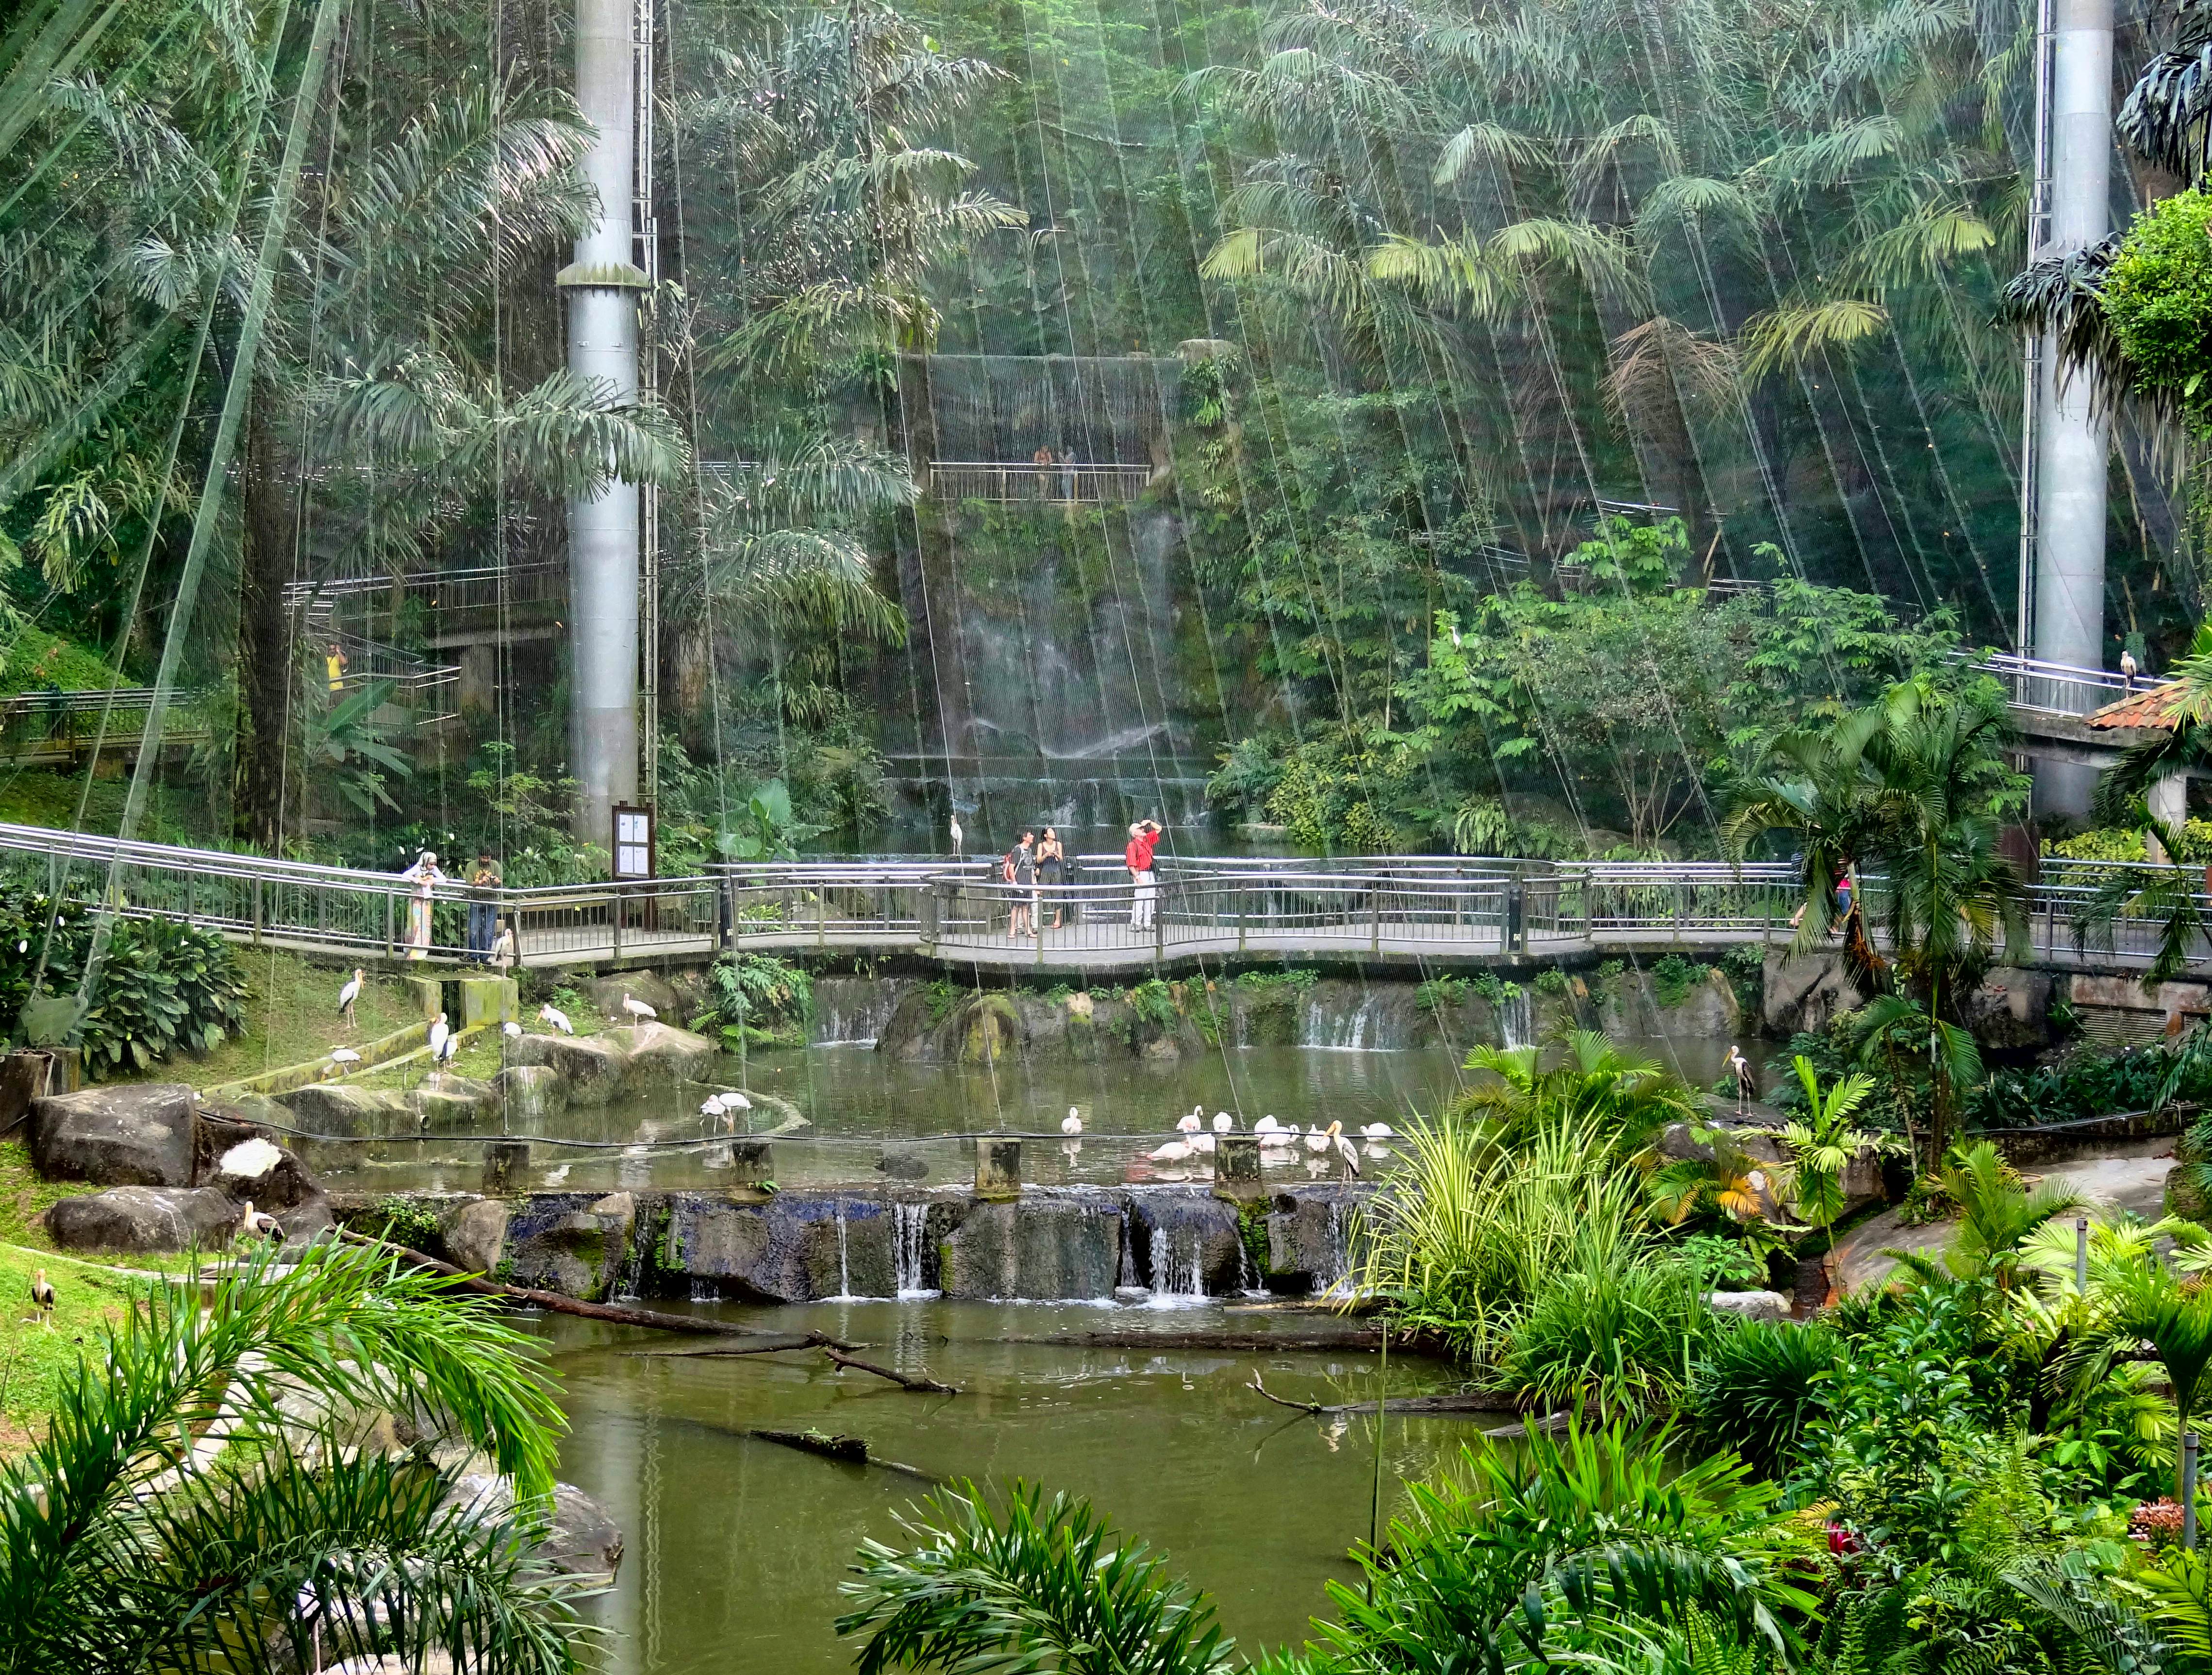 Kuala Lumpur Parks and Gardens Tour - Visit Bird Park, Butterfly Park & Gardens